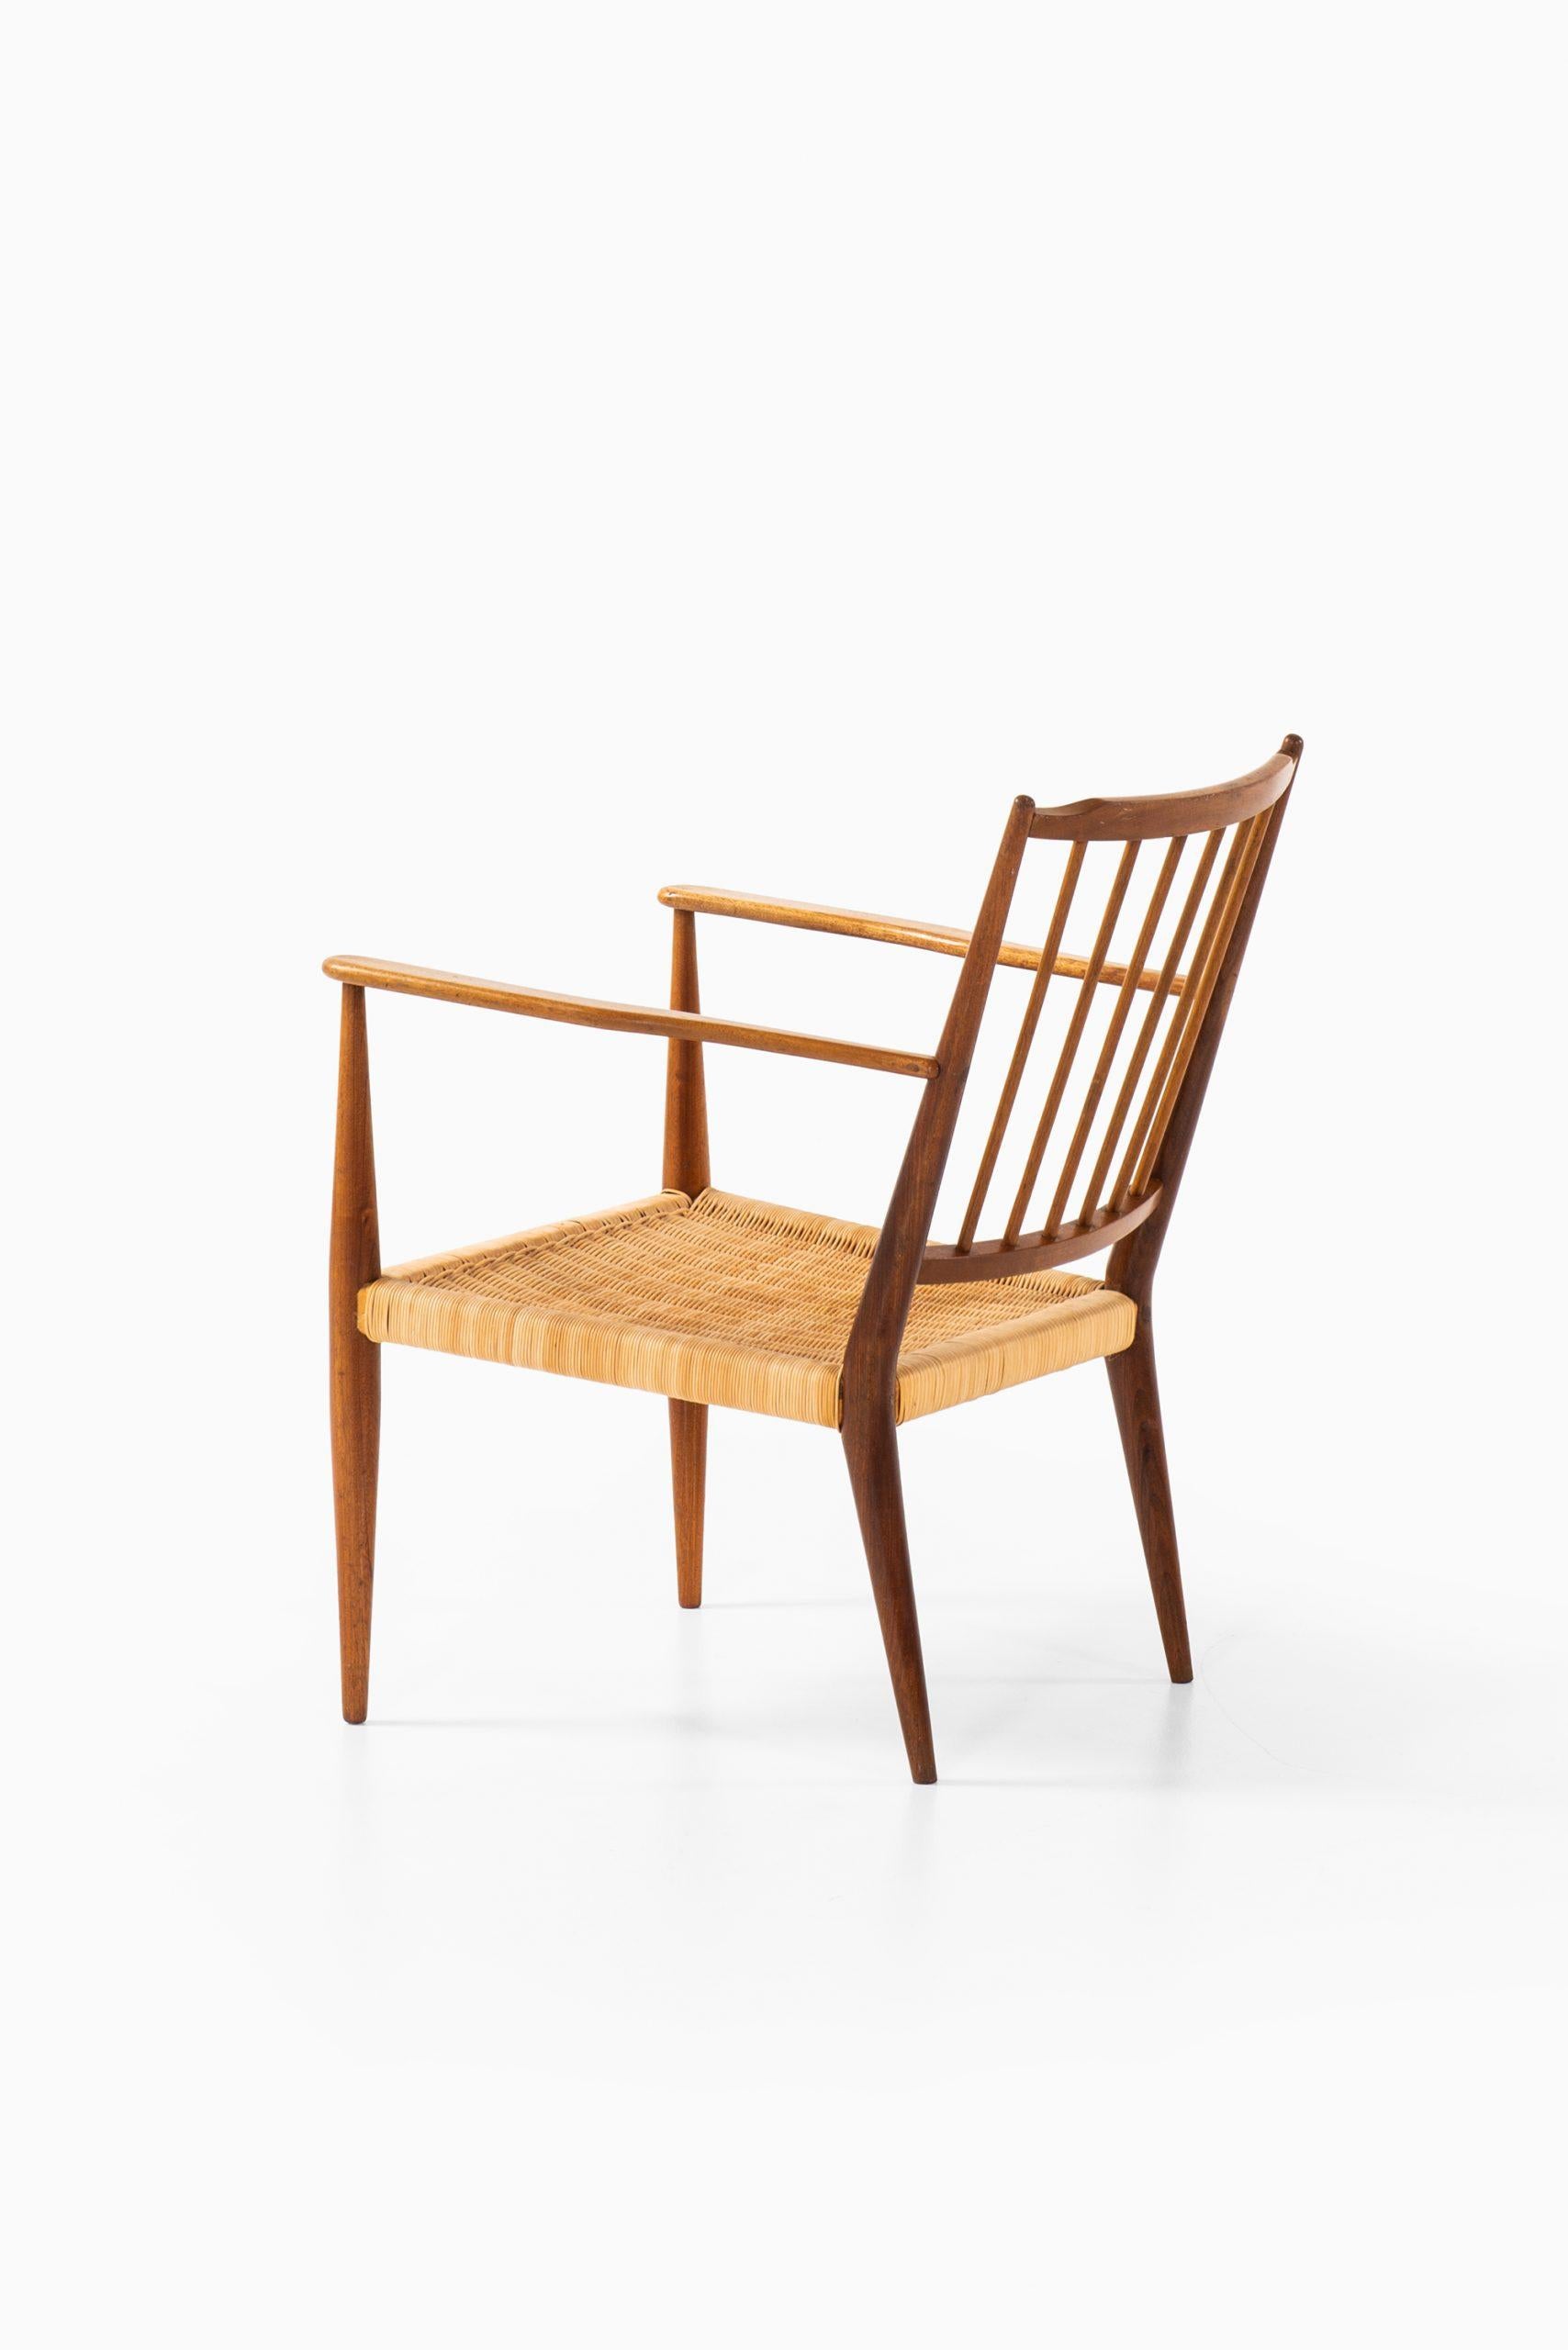 Mahogany Josef Frank Easy Chair Model 508 Produced by Svenskt Tenn in Sweden For Sale